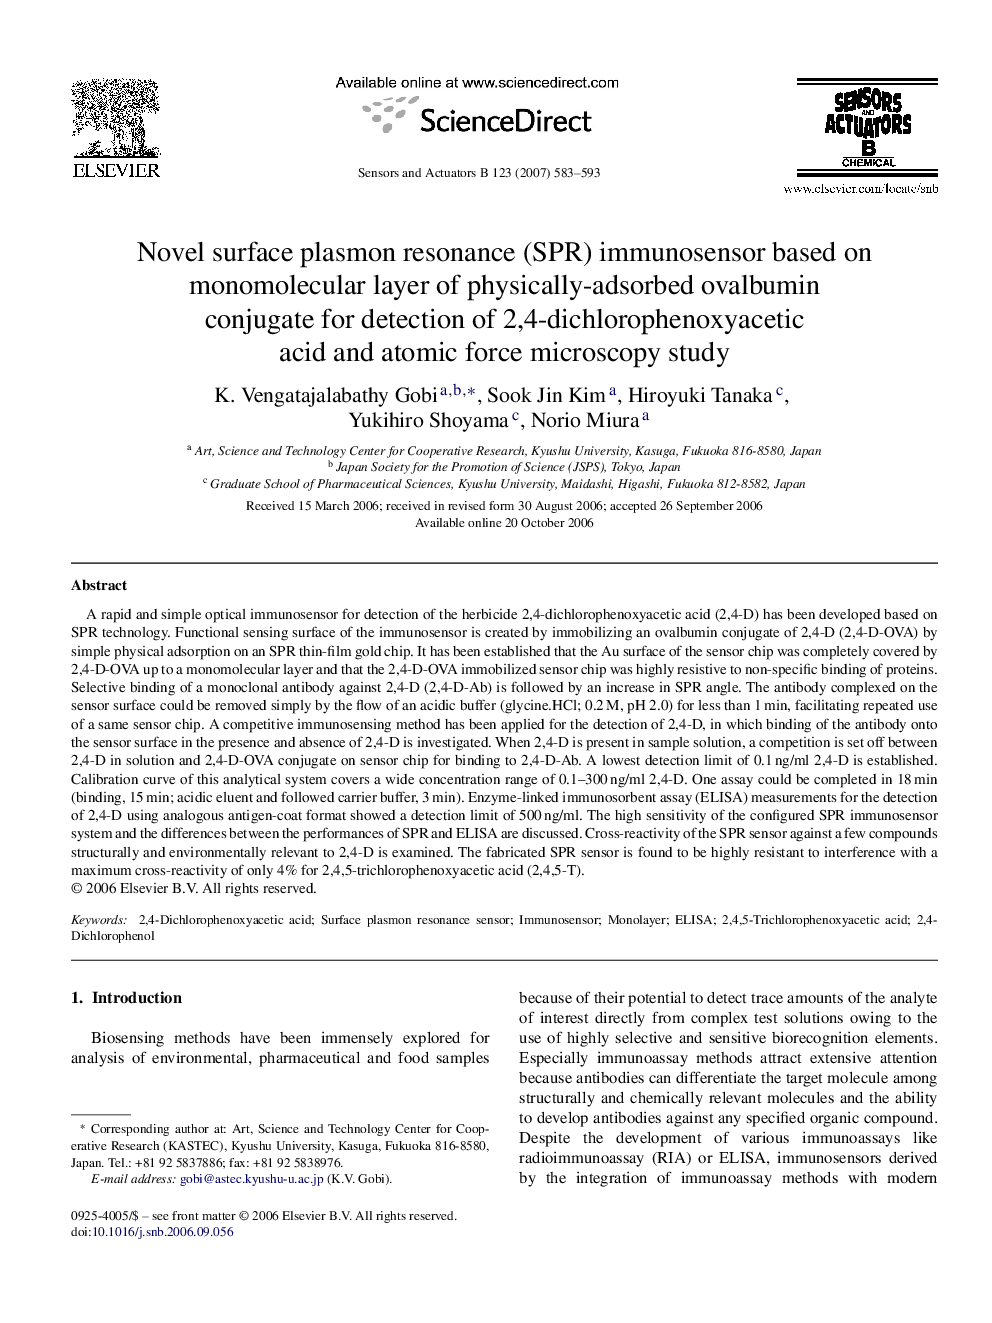 Novel surface plasmon resonance (SPR) immunosensor based on monomolecular layer of physically-adsorbed ovalbumin conjugate for detection of 2,4-dichlorophenoxyacetic acid and atomic force microscopy study